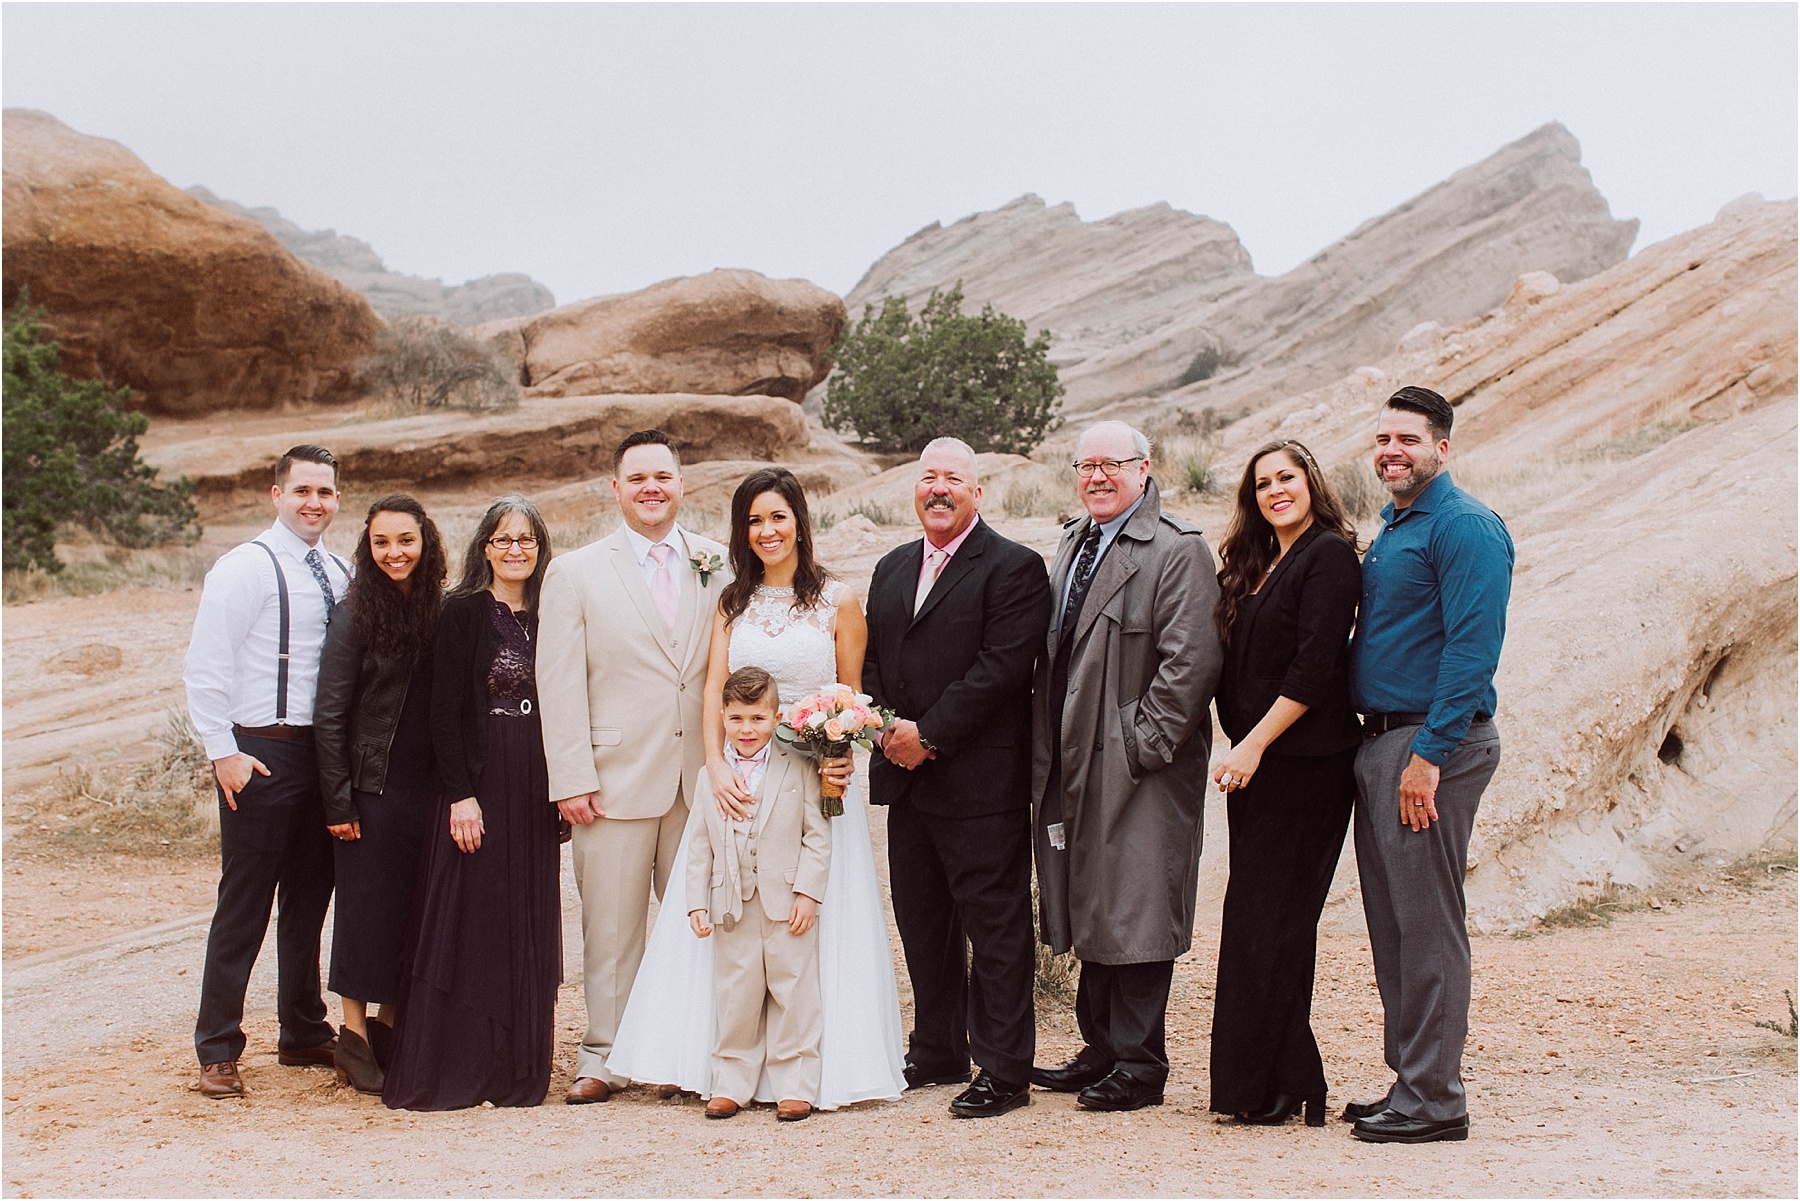 Vasquez Rocks Intimate Wedding & Elopement Photography - Family Formal Portraits